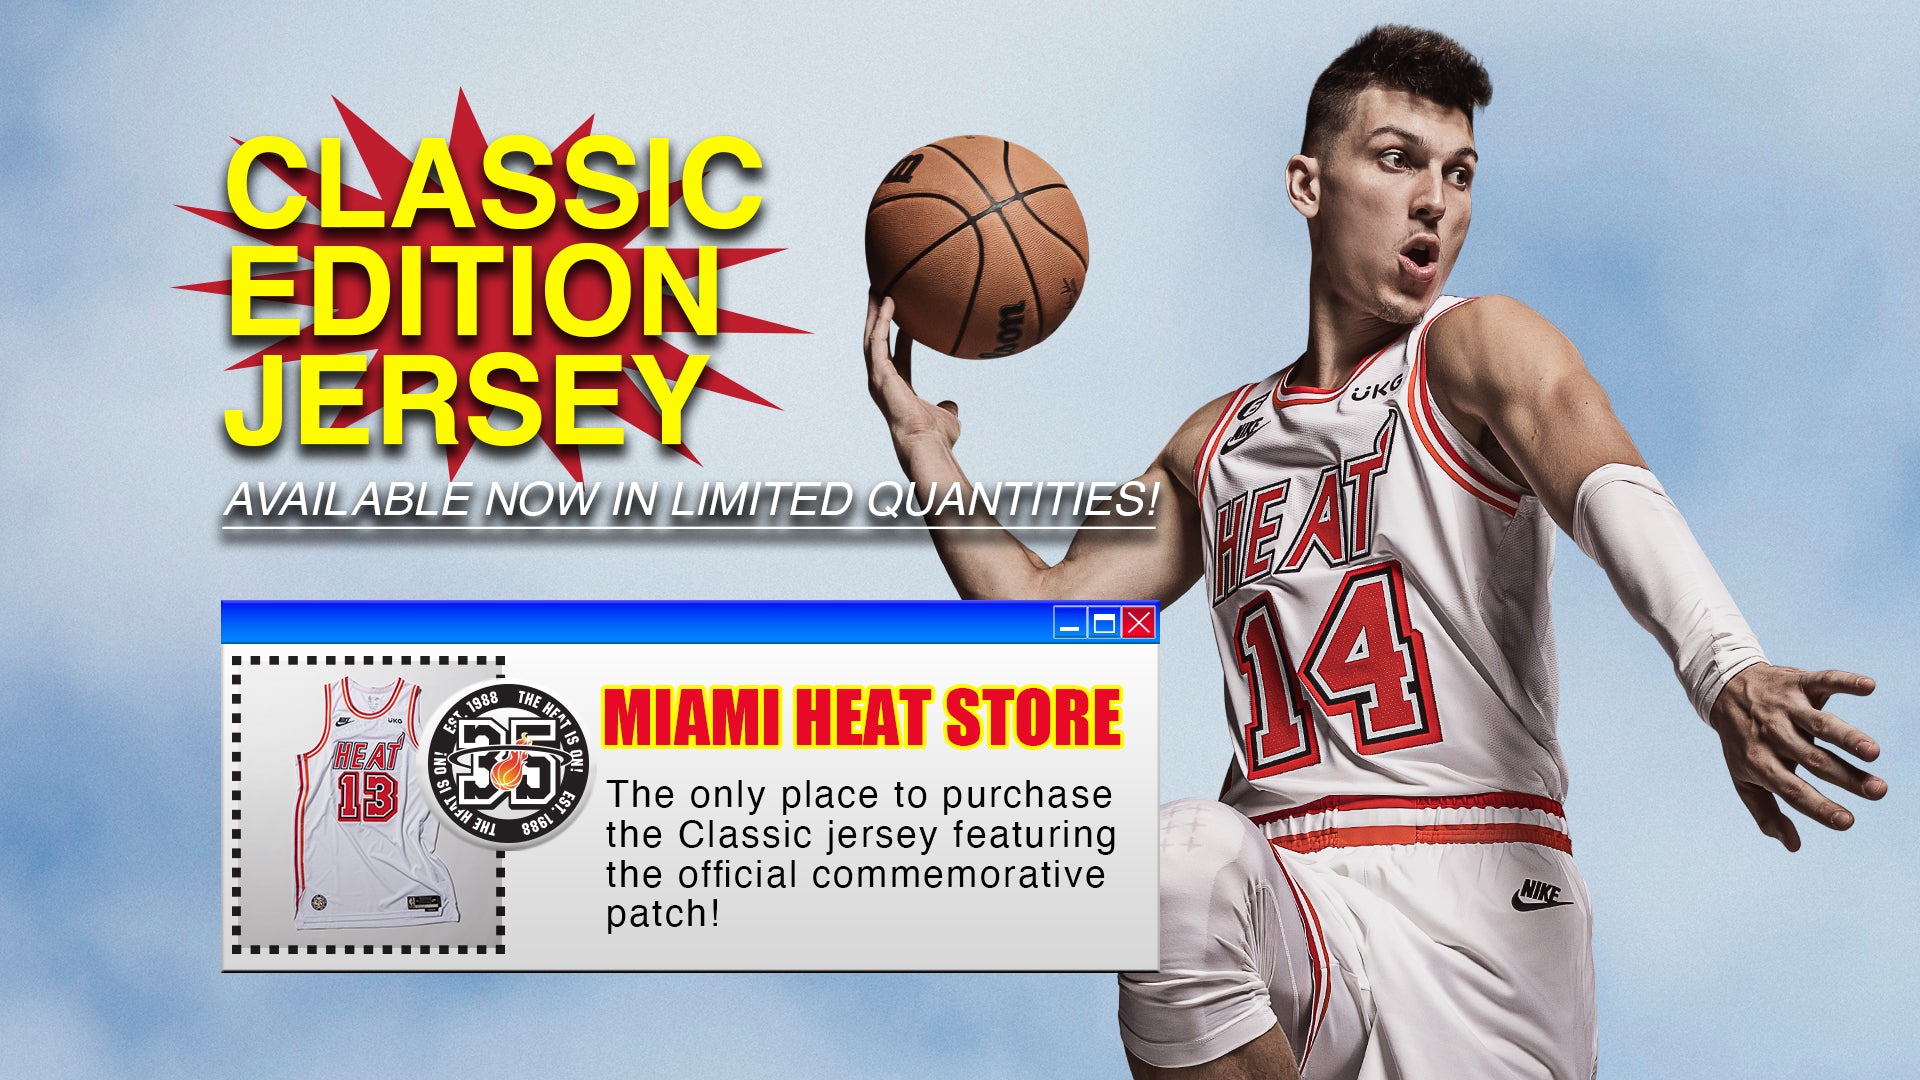 Miami Heat - Classic Edition jerseys are here!